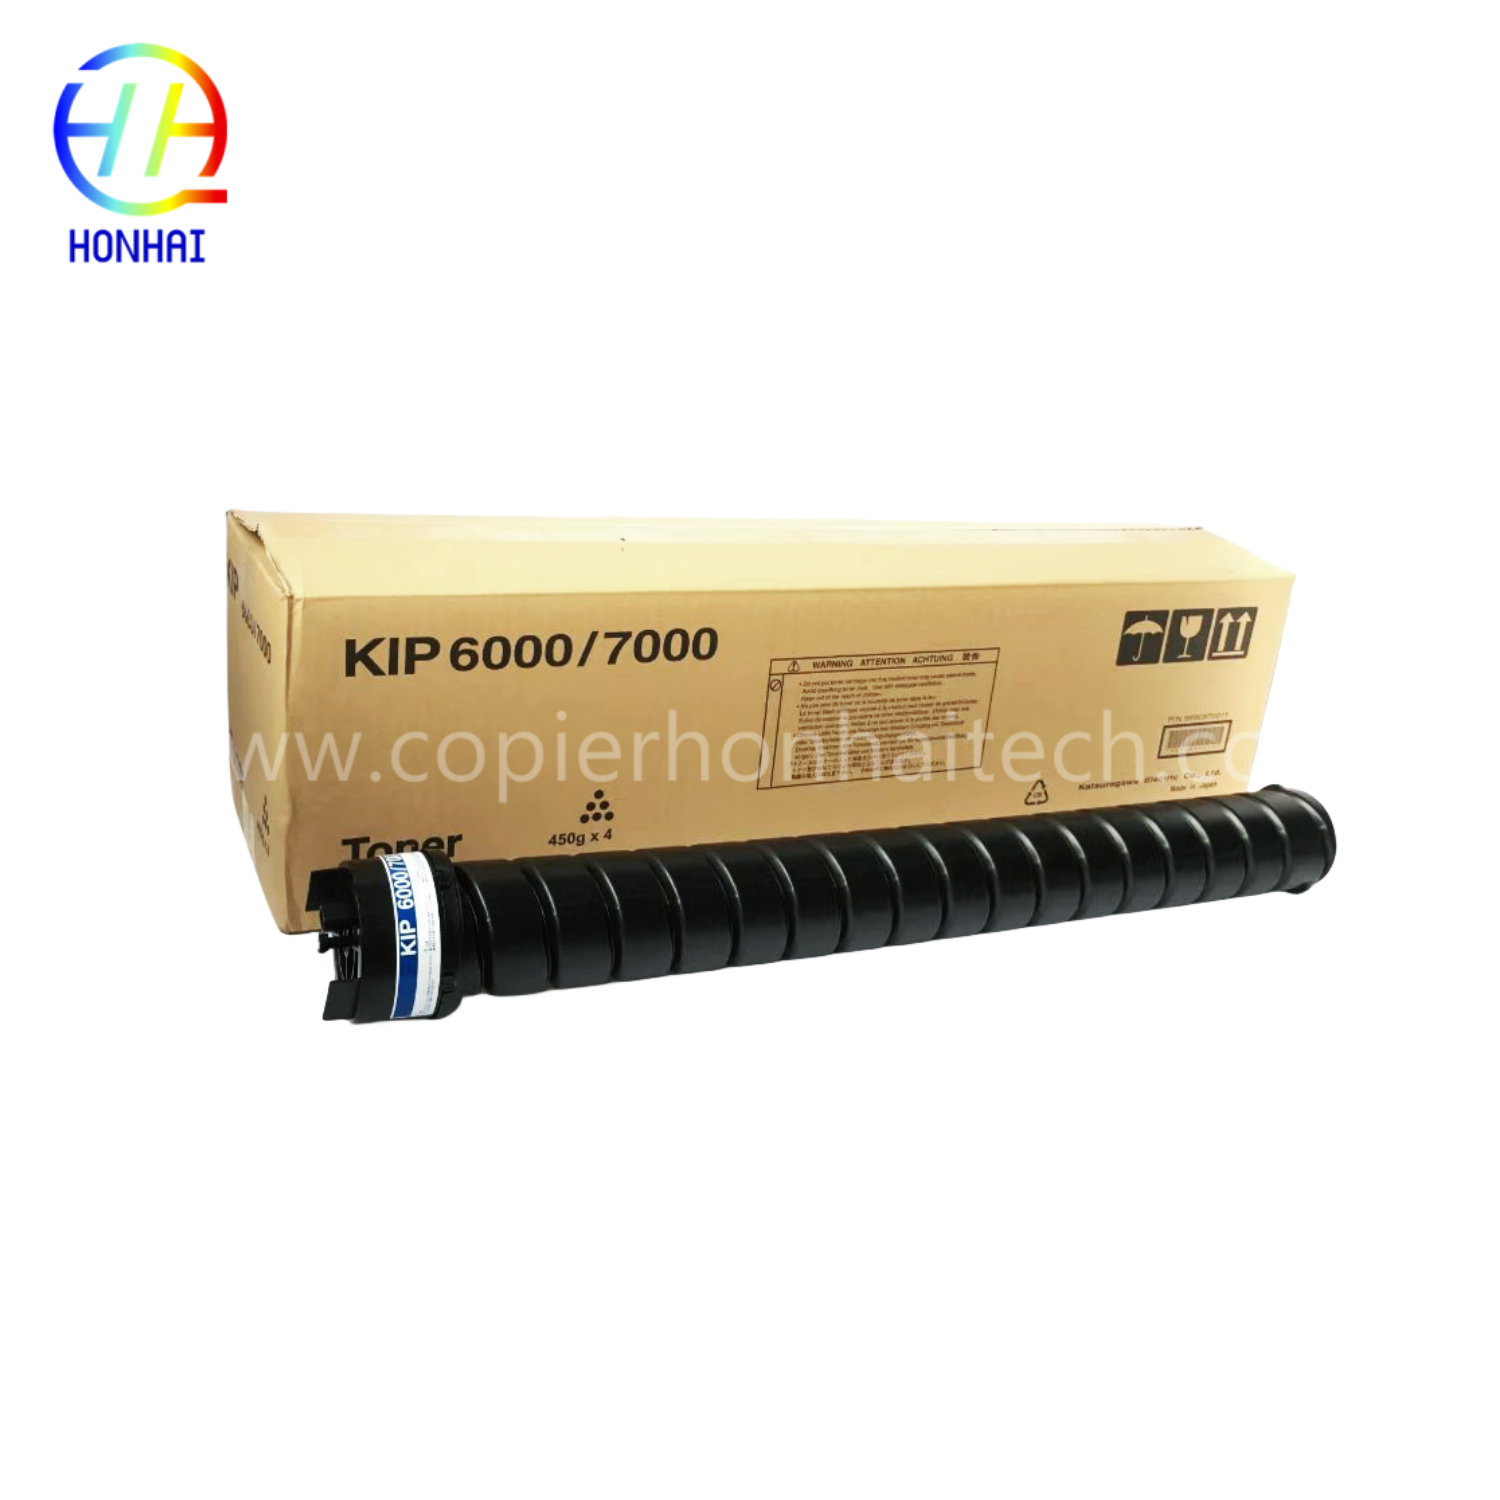 https://www.copierhonhaitech.com/toner-cartridge-for-kip-6000-7000-chan-black-kip-toner-product/